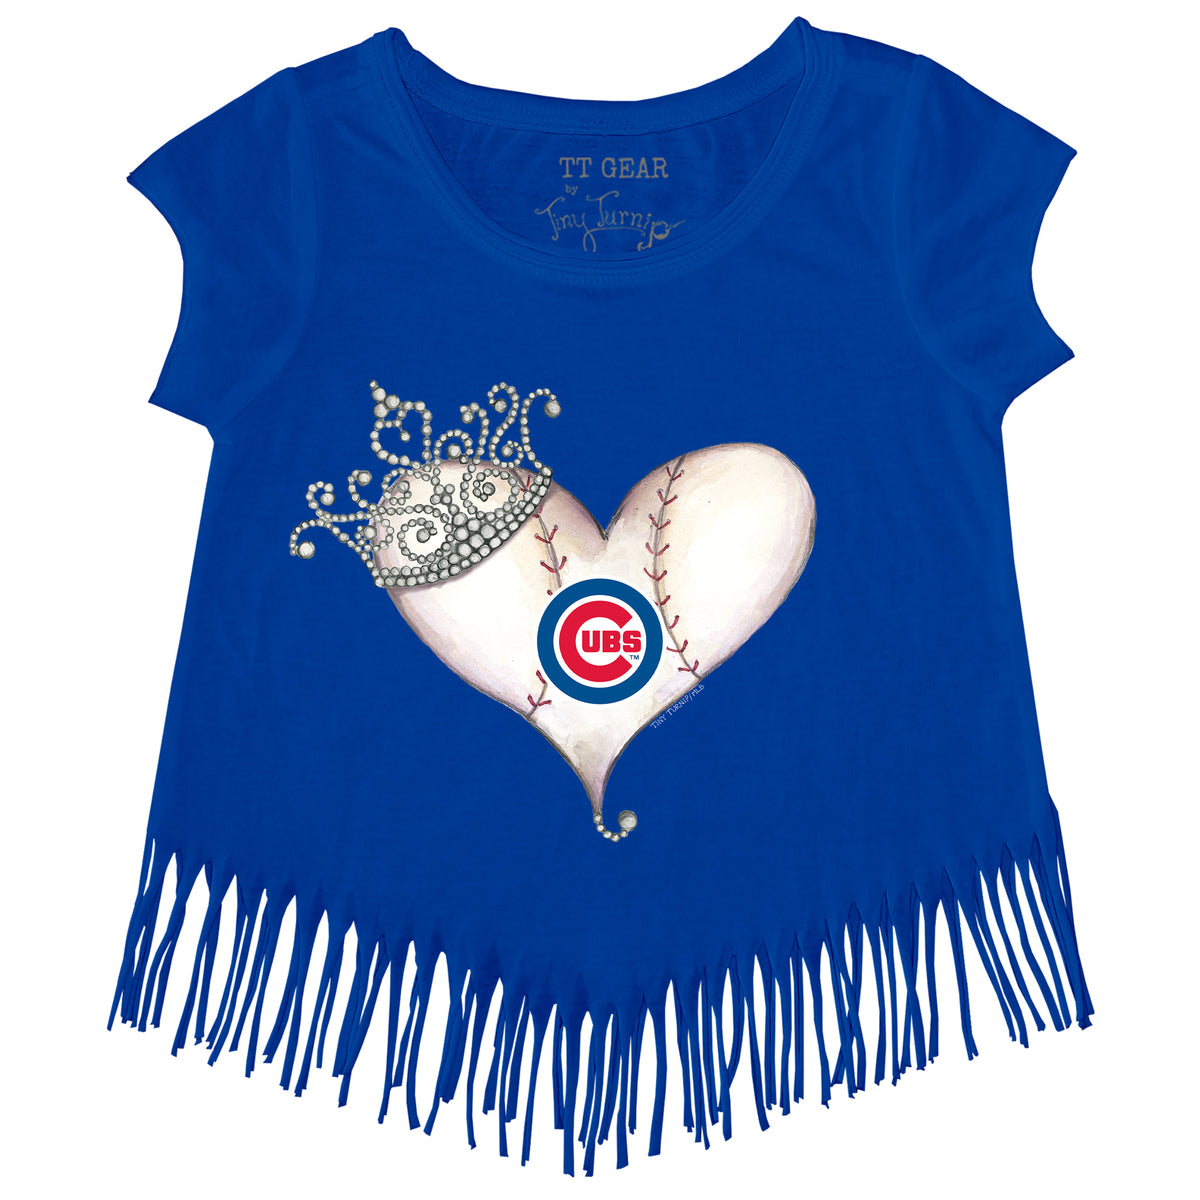 Chicago Cubs Tiara Heart Fringe Tee